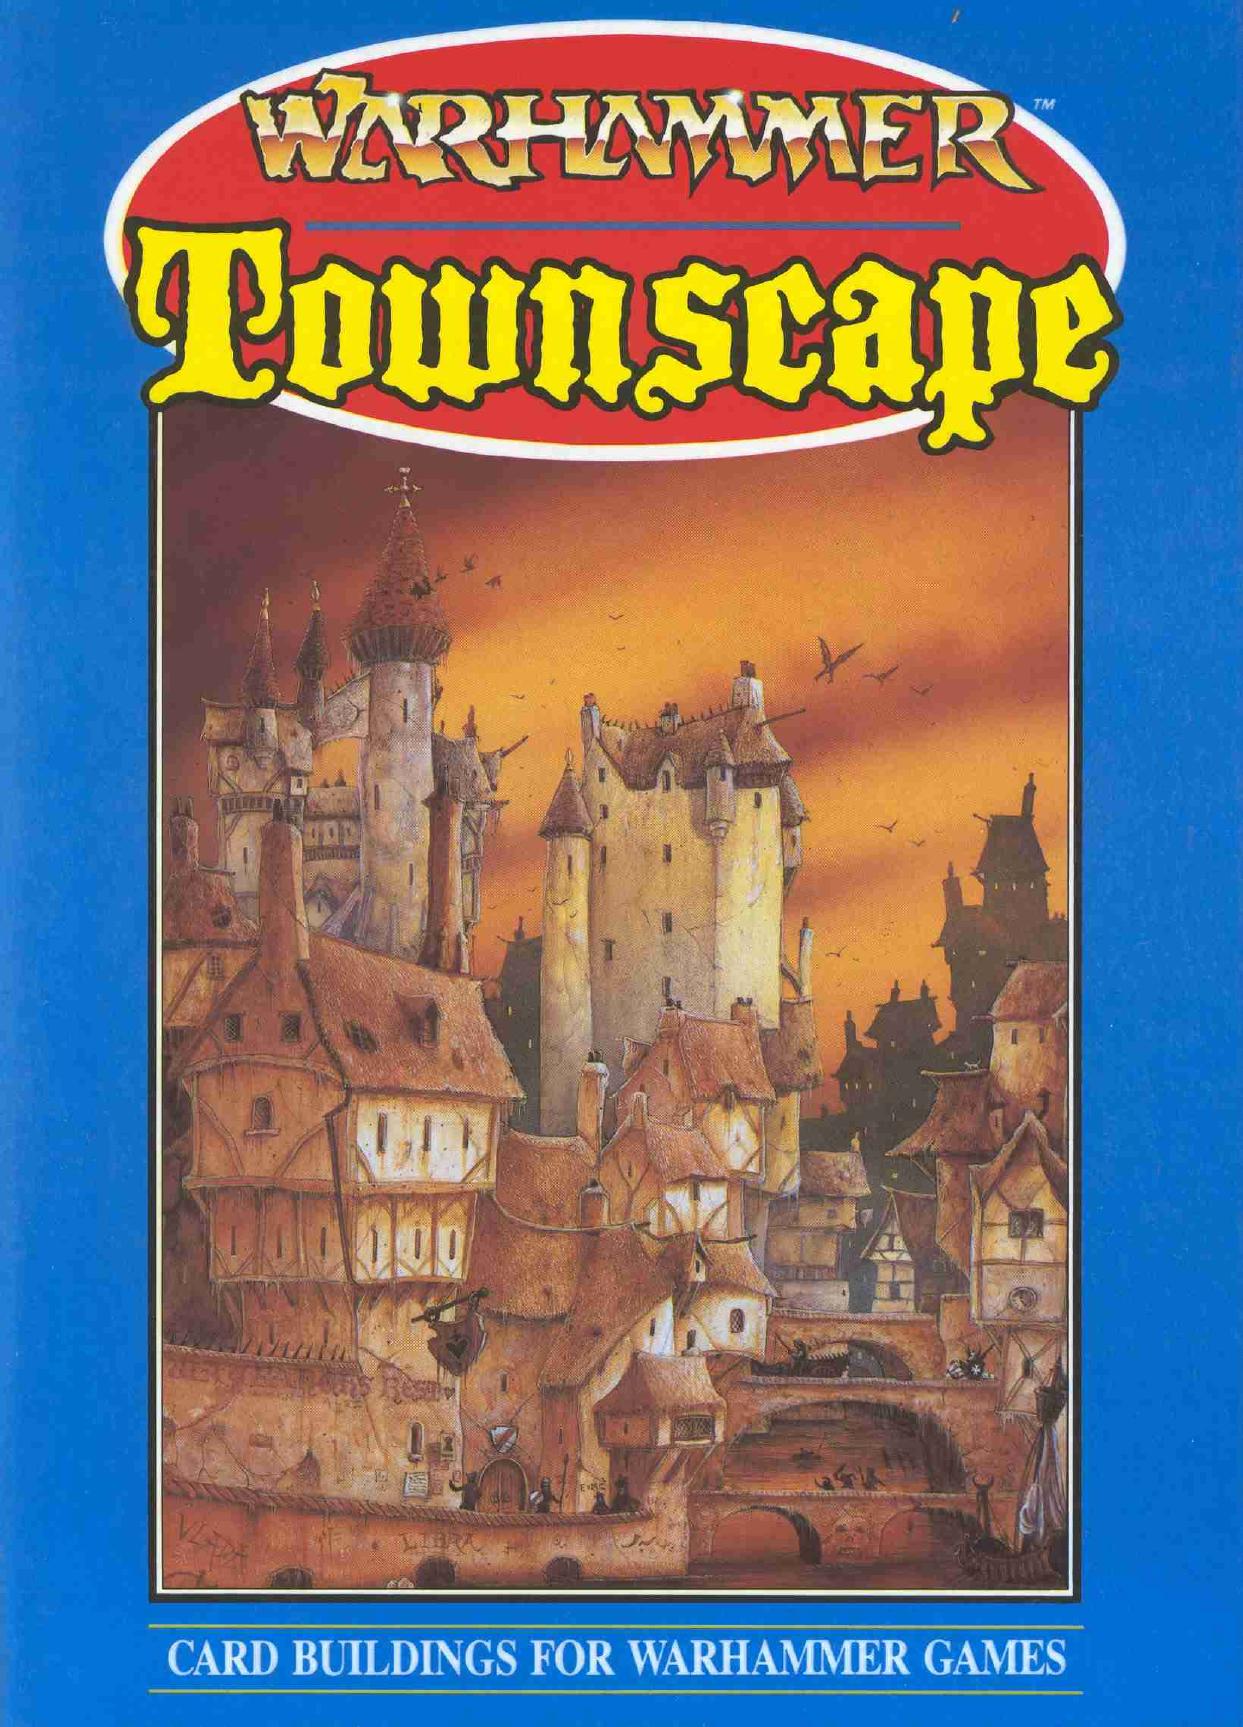 Townscape (Card Buildings)